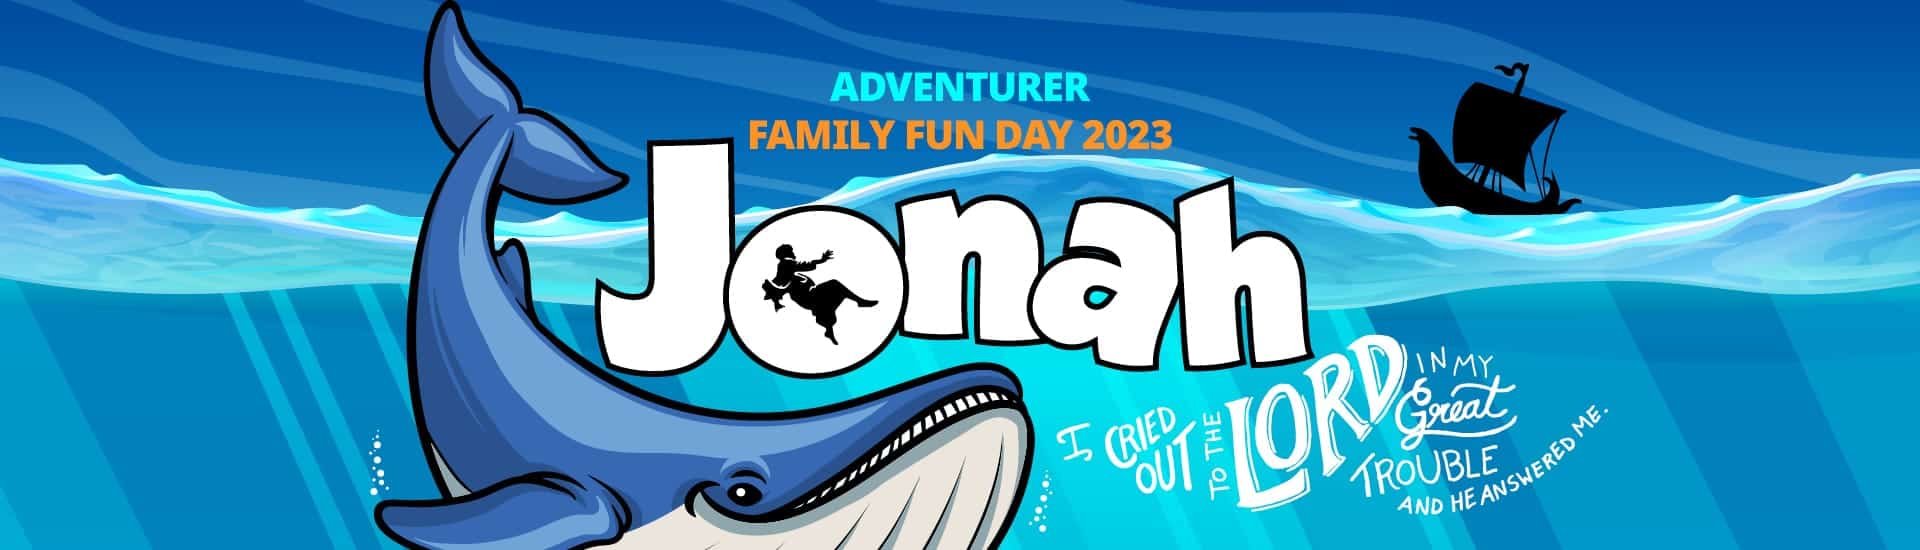 Adventurer Family Fun Day 2023 Header Image